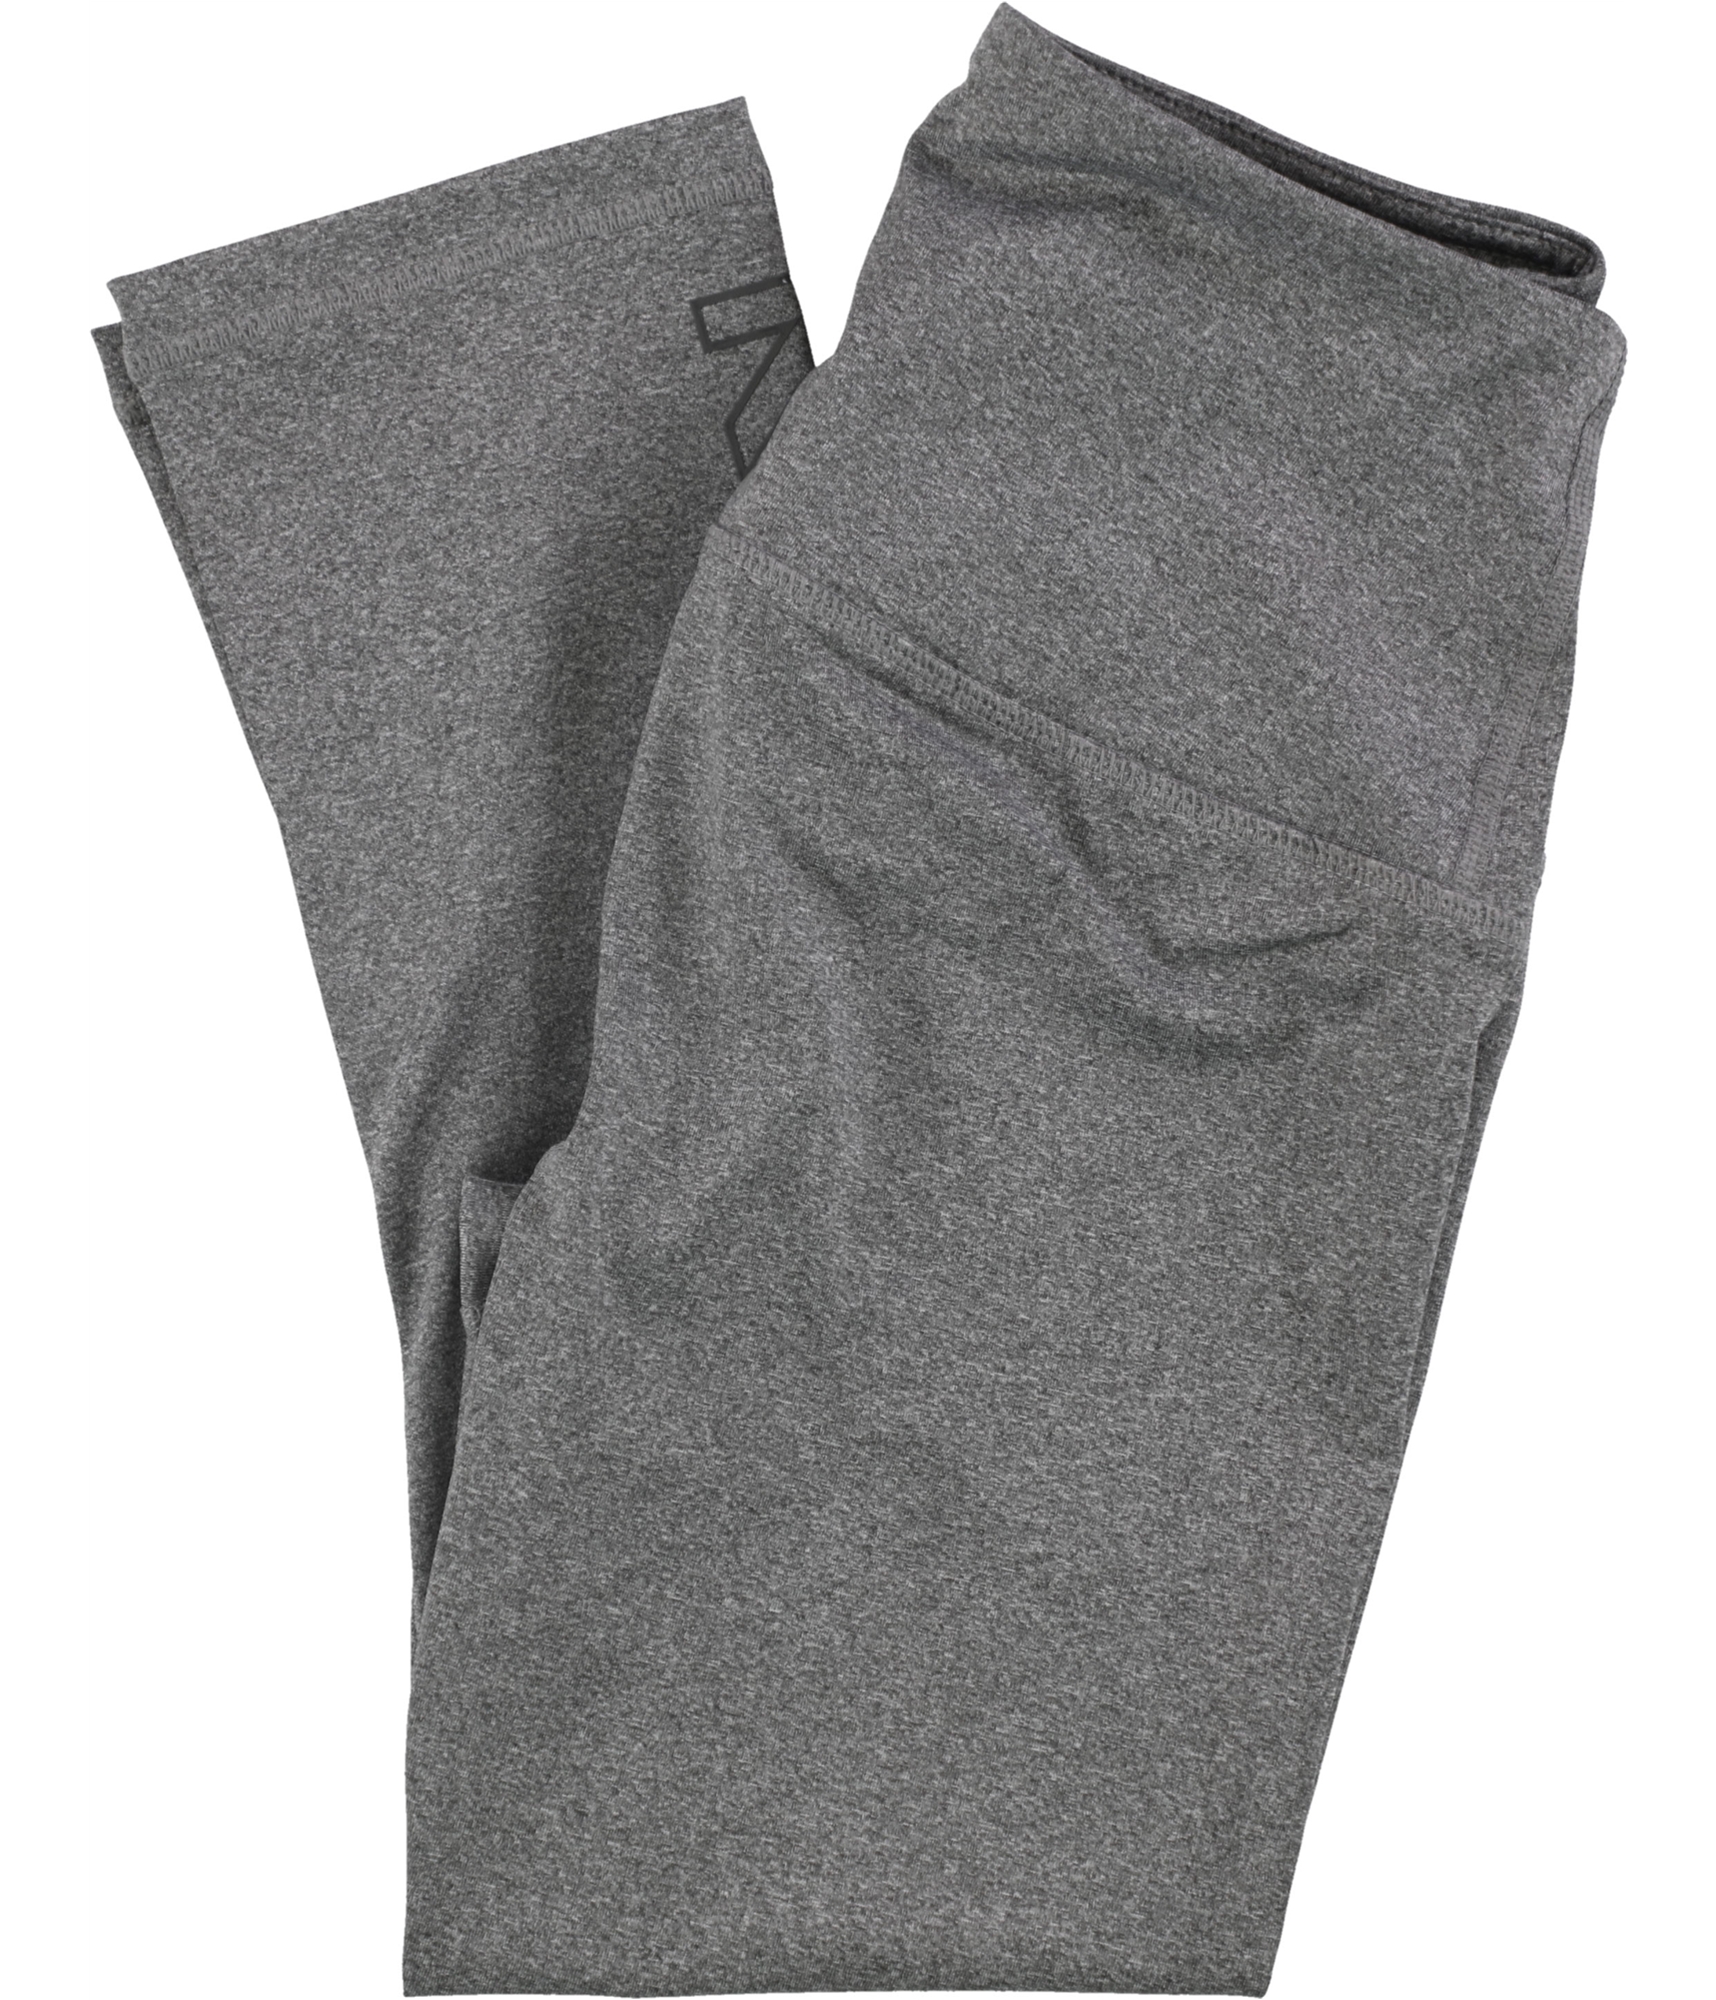 Reebok Womens Highrise Capri Compression Athletic Pants, Grey, Medium 